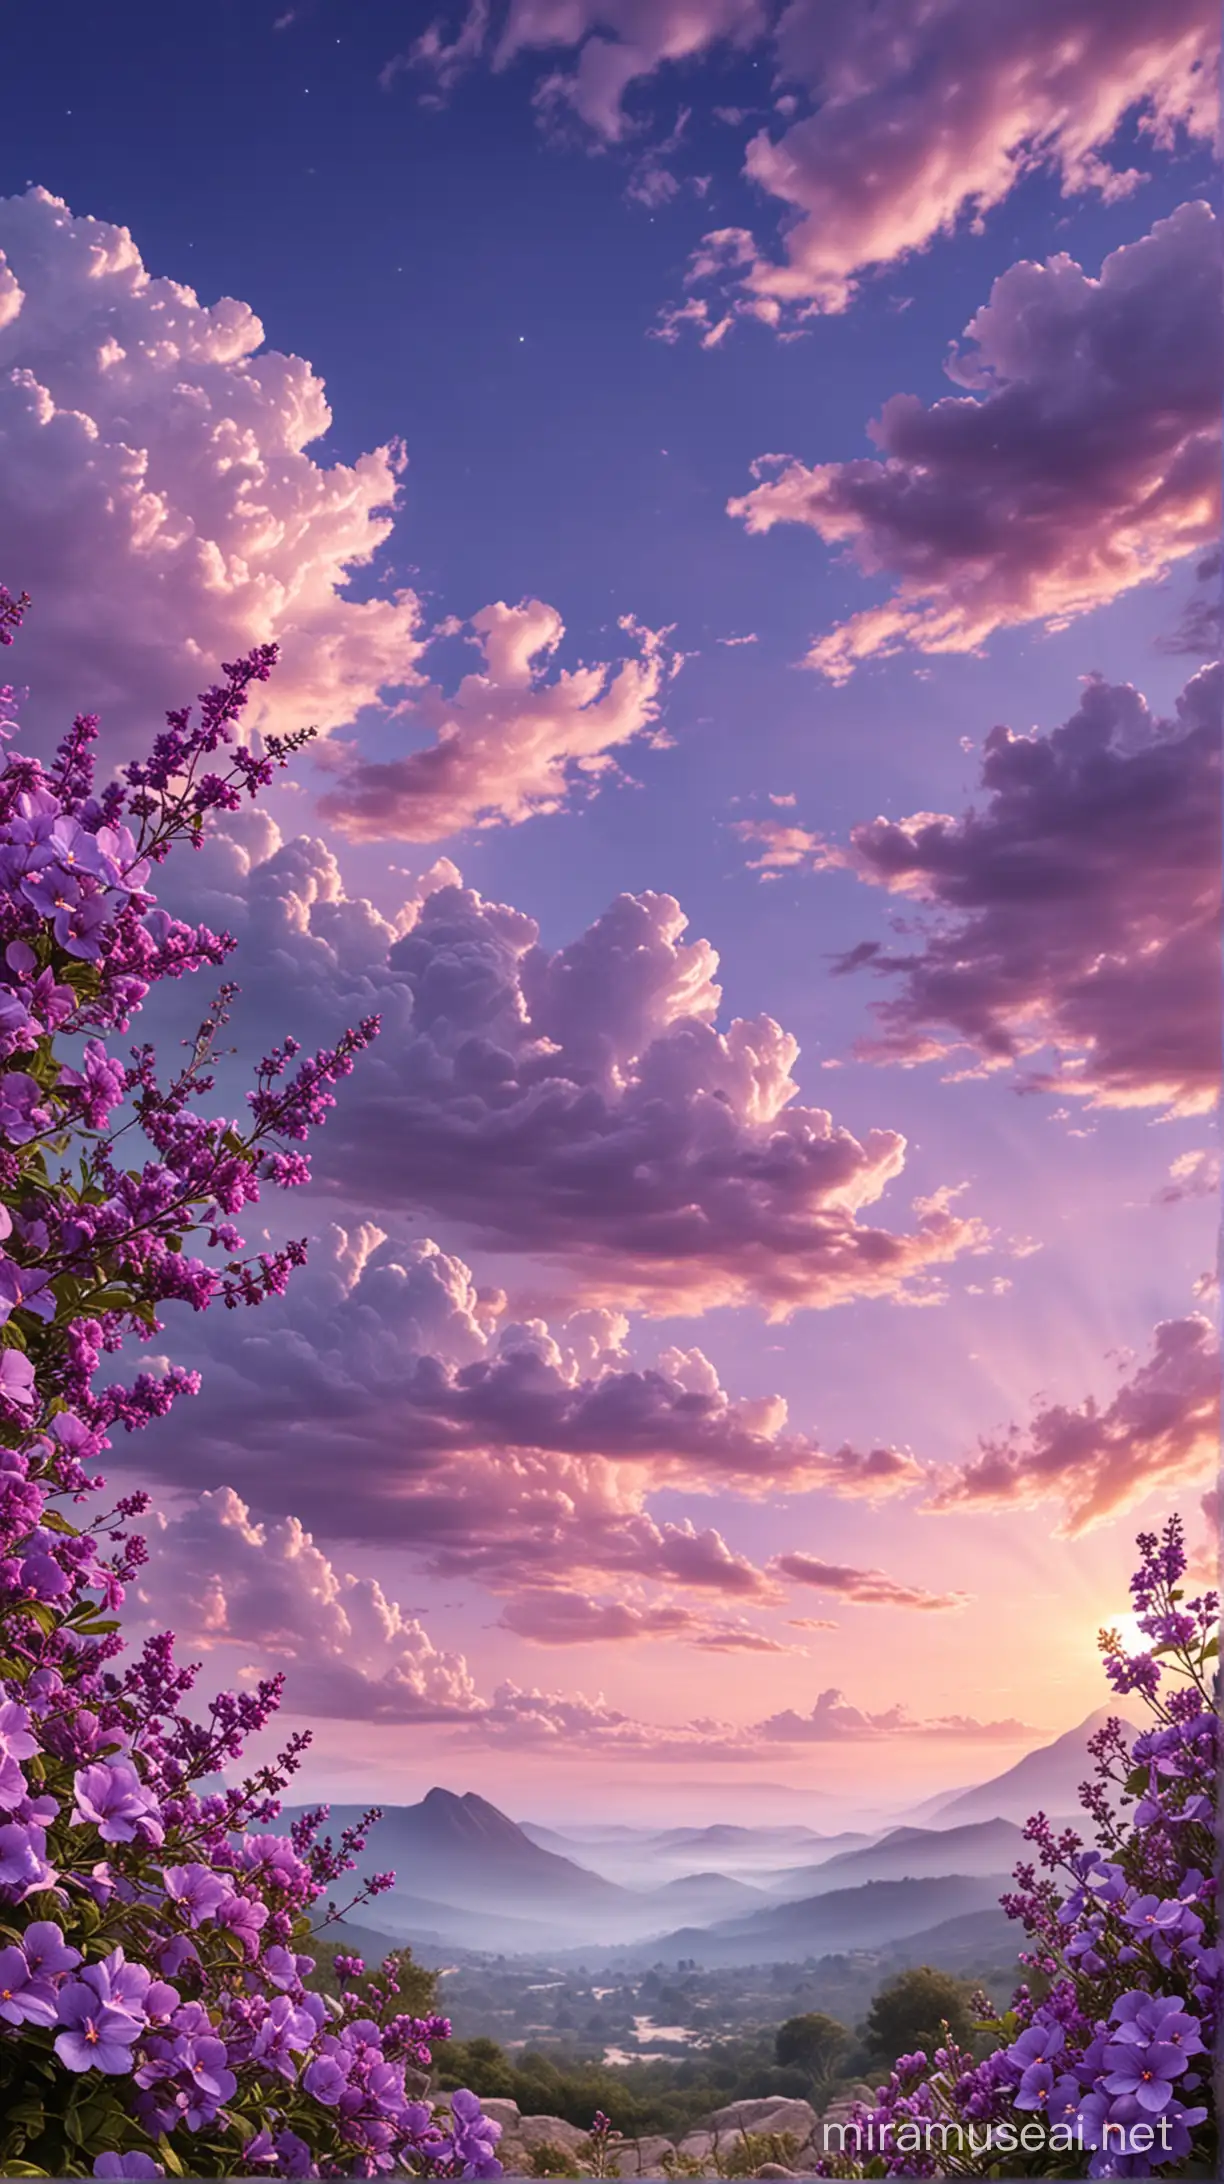 Peaceful Memorial Sky with Purple Flowers